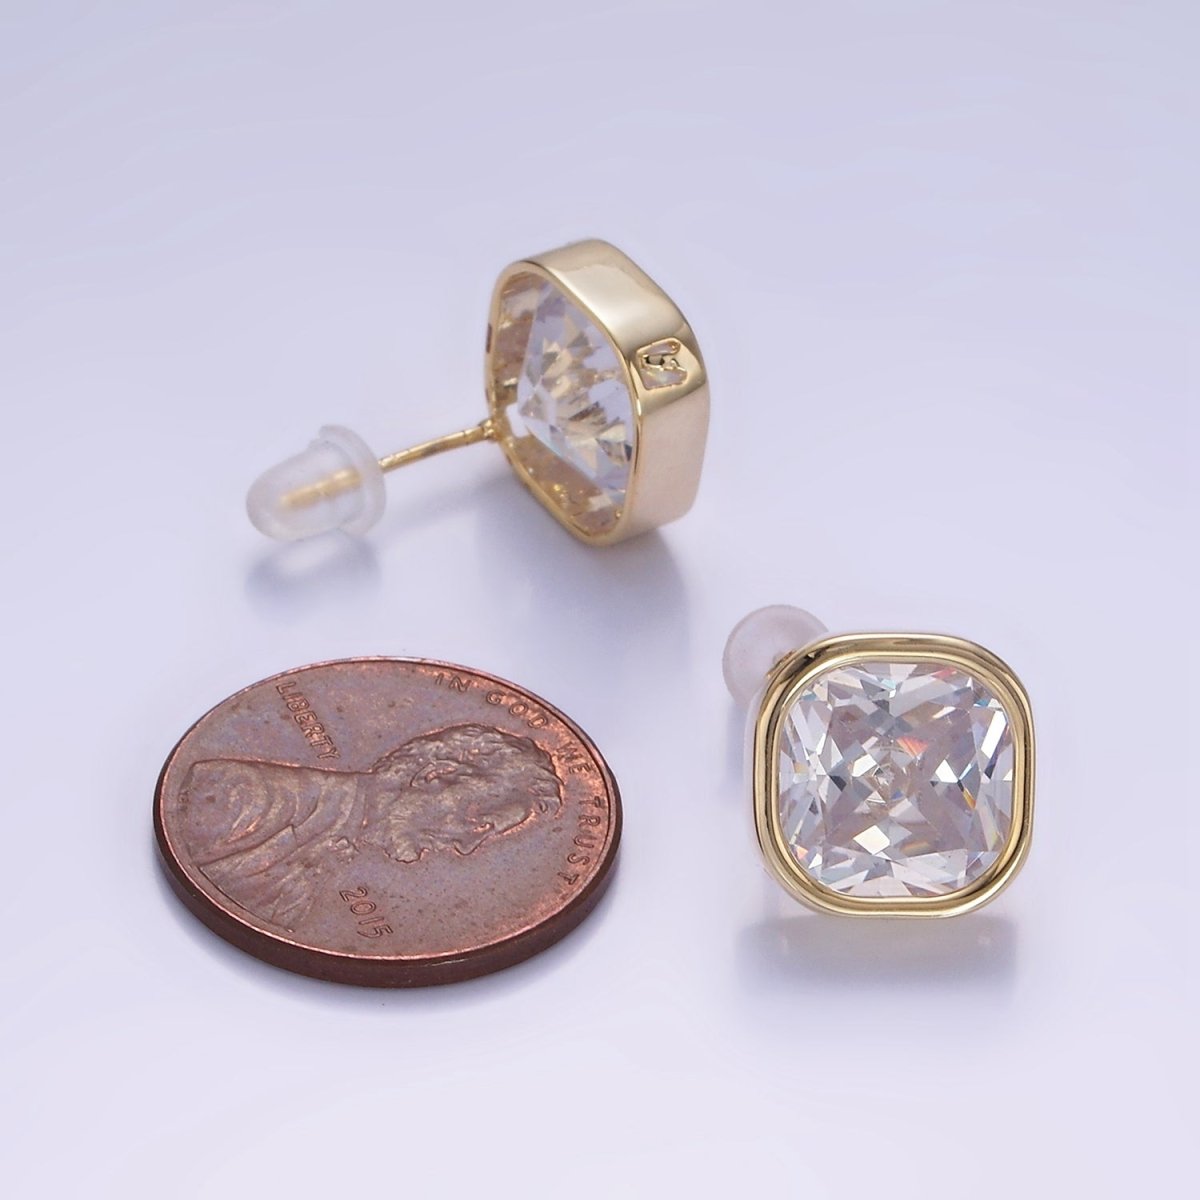 10mm Clear CZ Square Bezel Stud Earrings in Gold & Silver | V514 V515 - DLUXCA